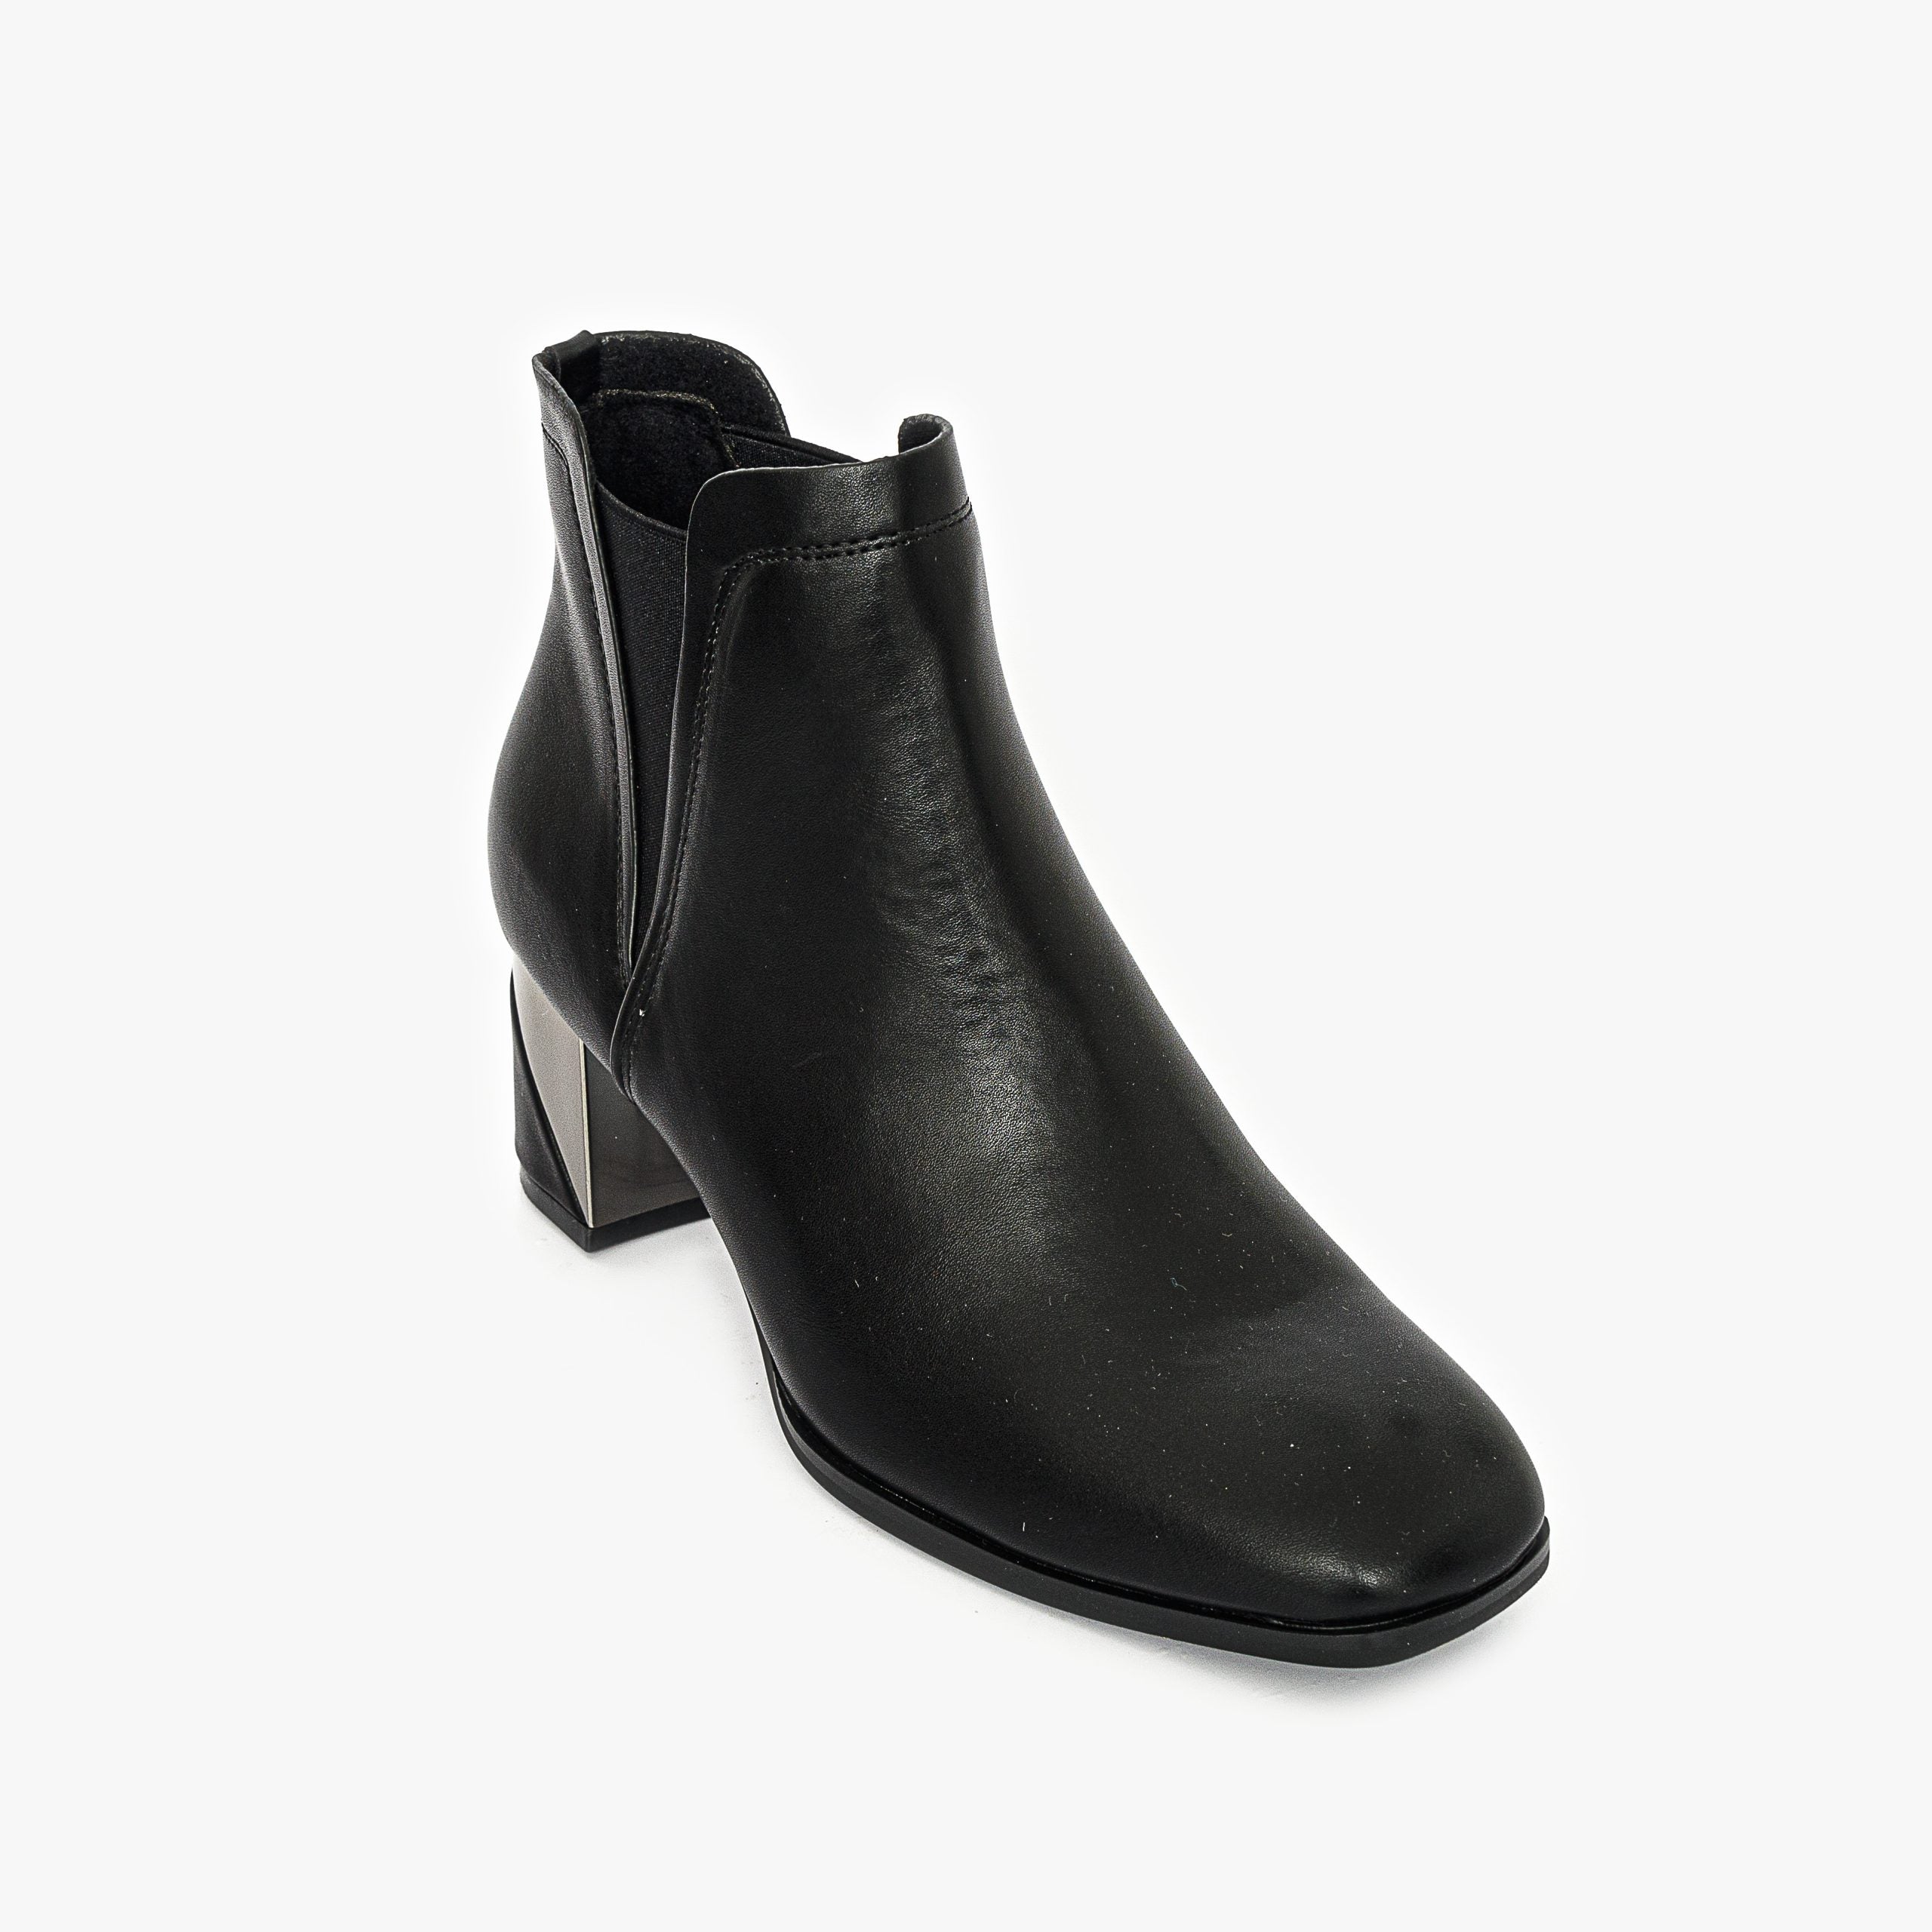 Shoeroom Ankle Boot For Women 2796